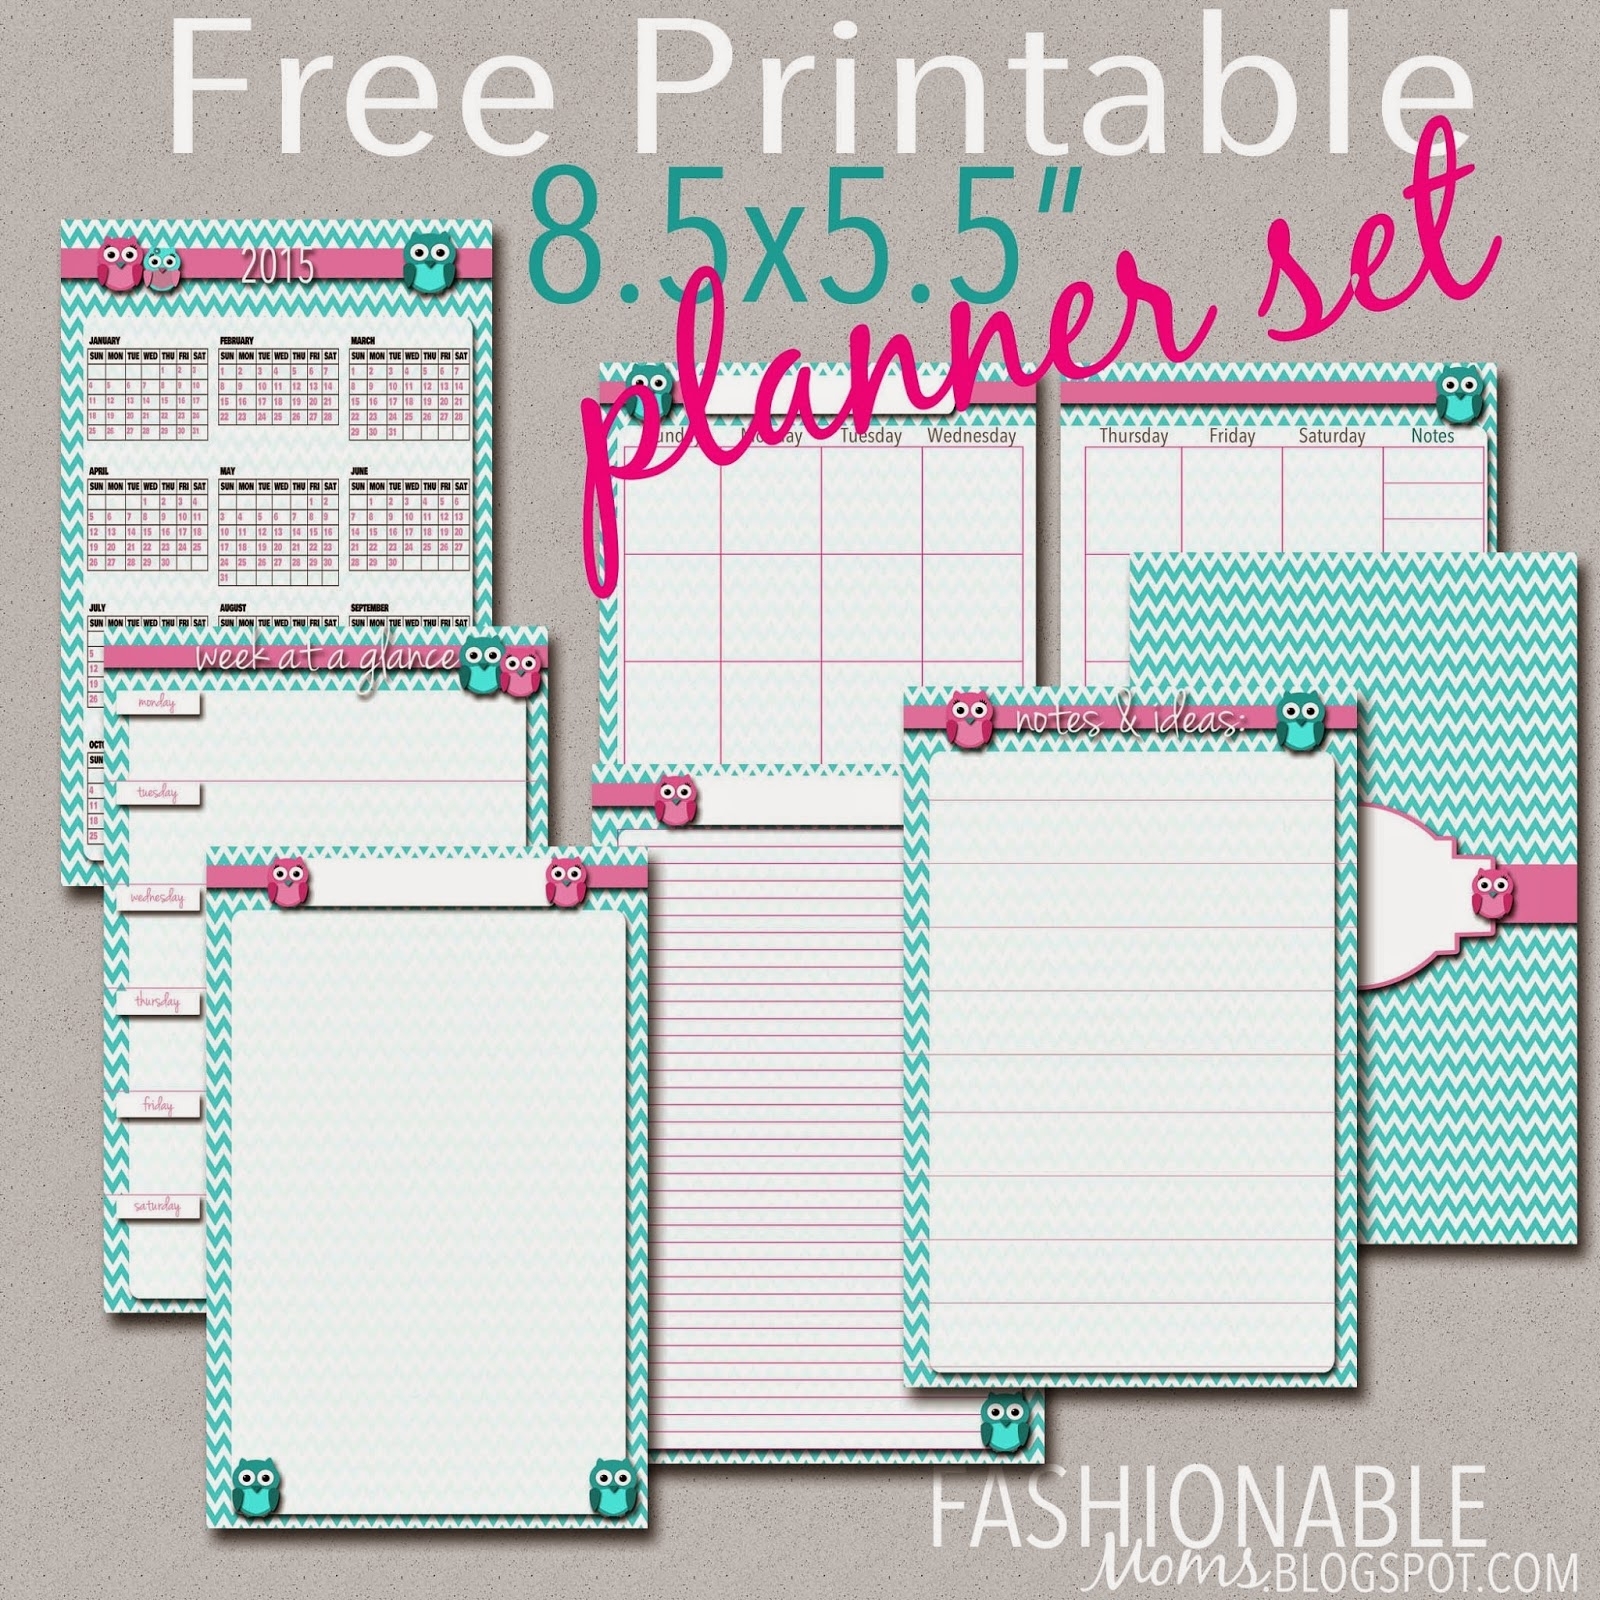 Fashionable Moms: Free Printable Half Page Owl Planner Set